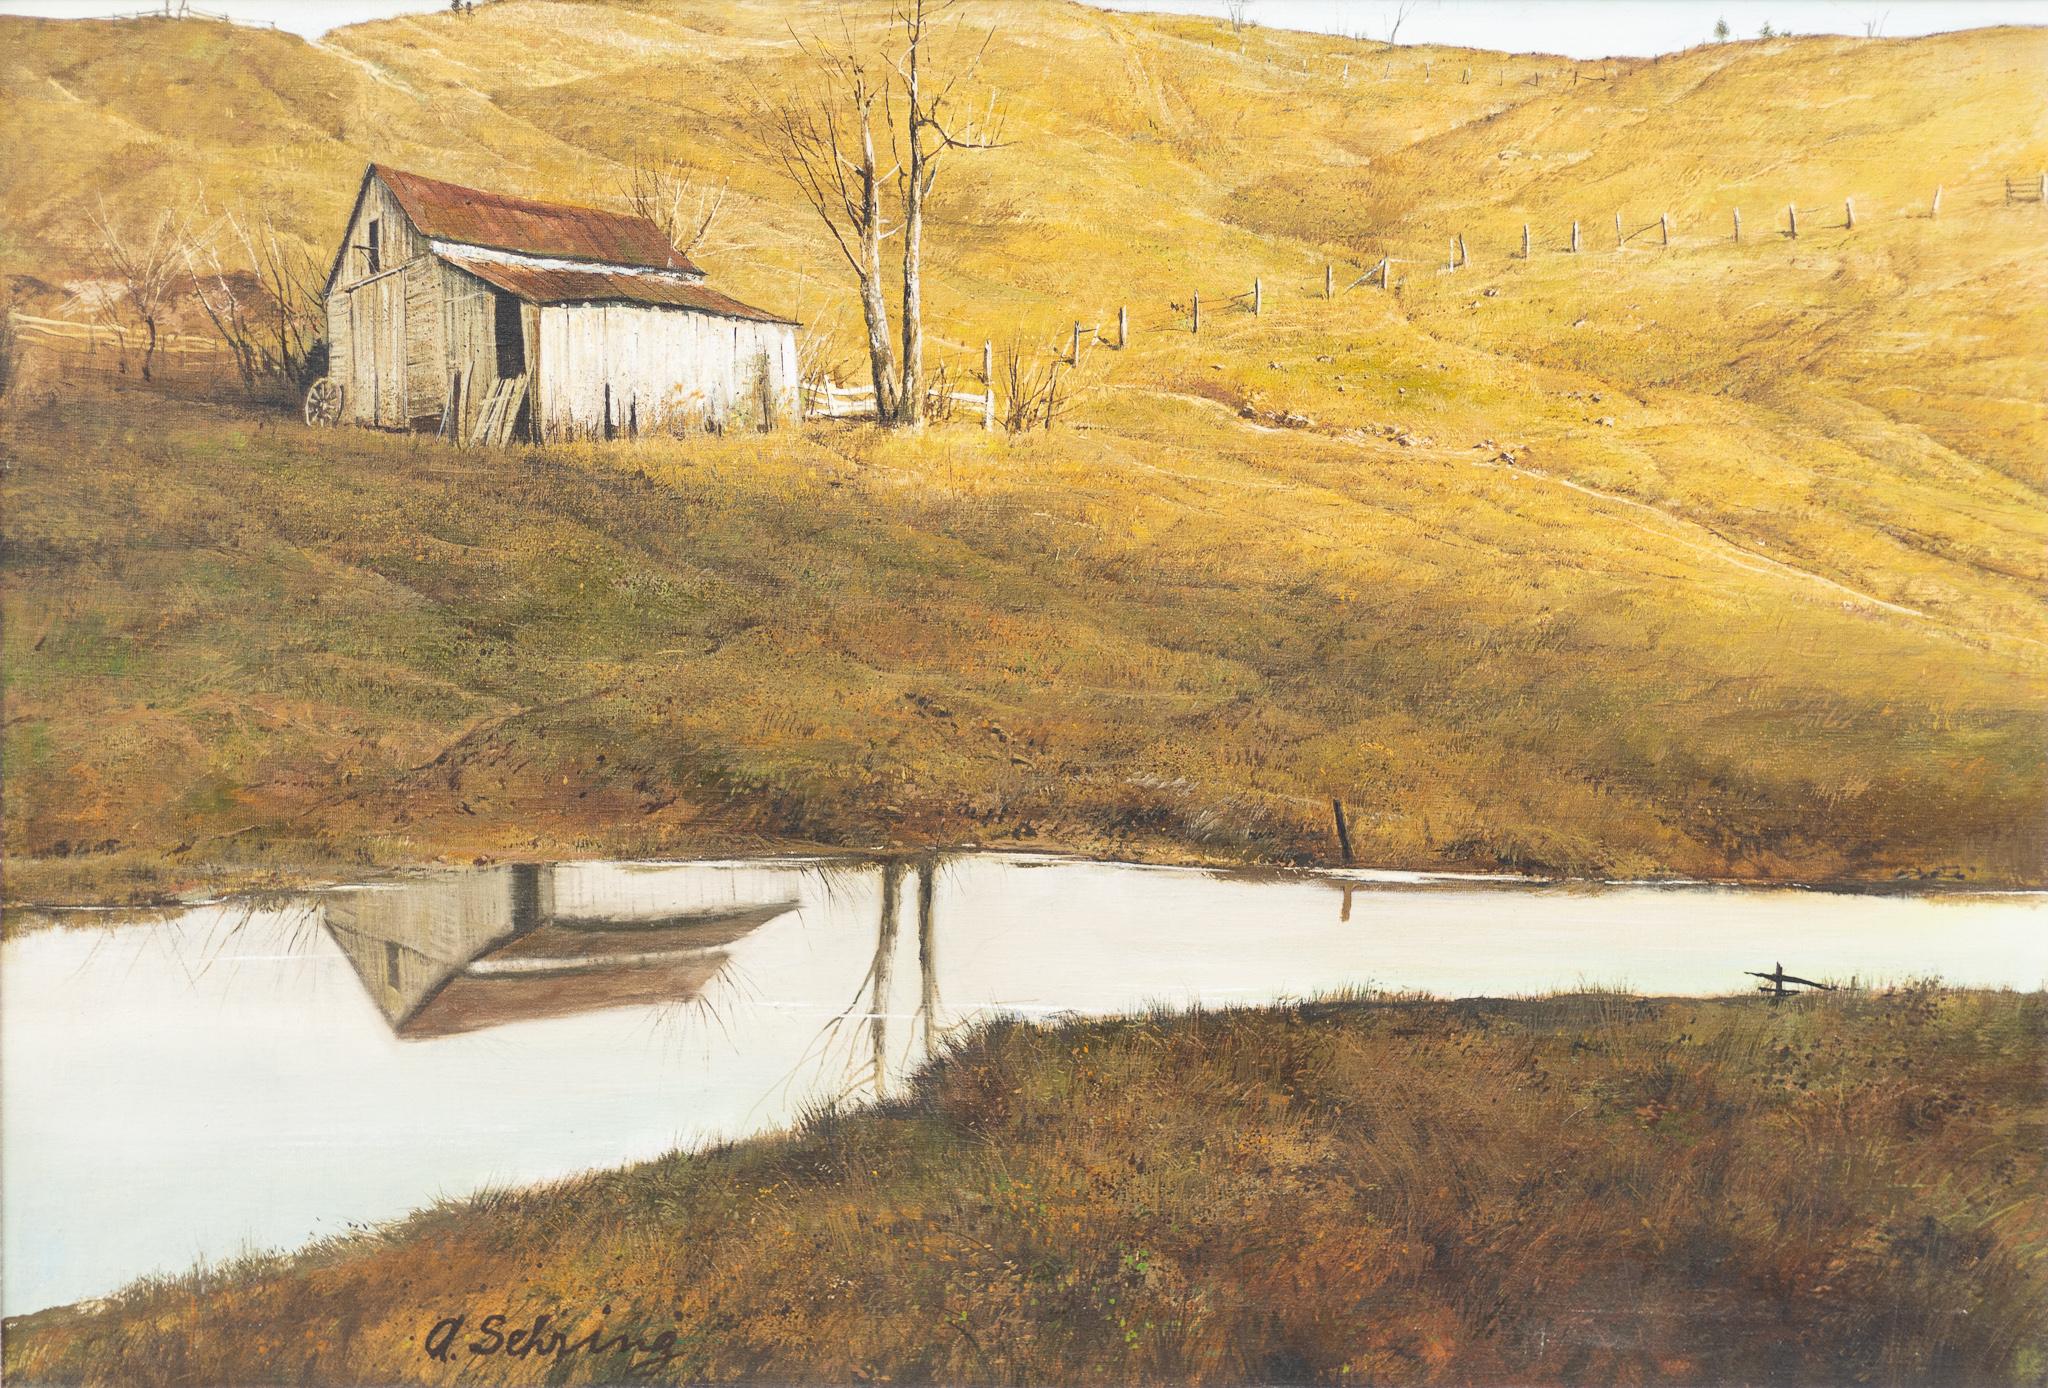 Adolf Sehring Landscape Painting - "White Barn"